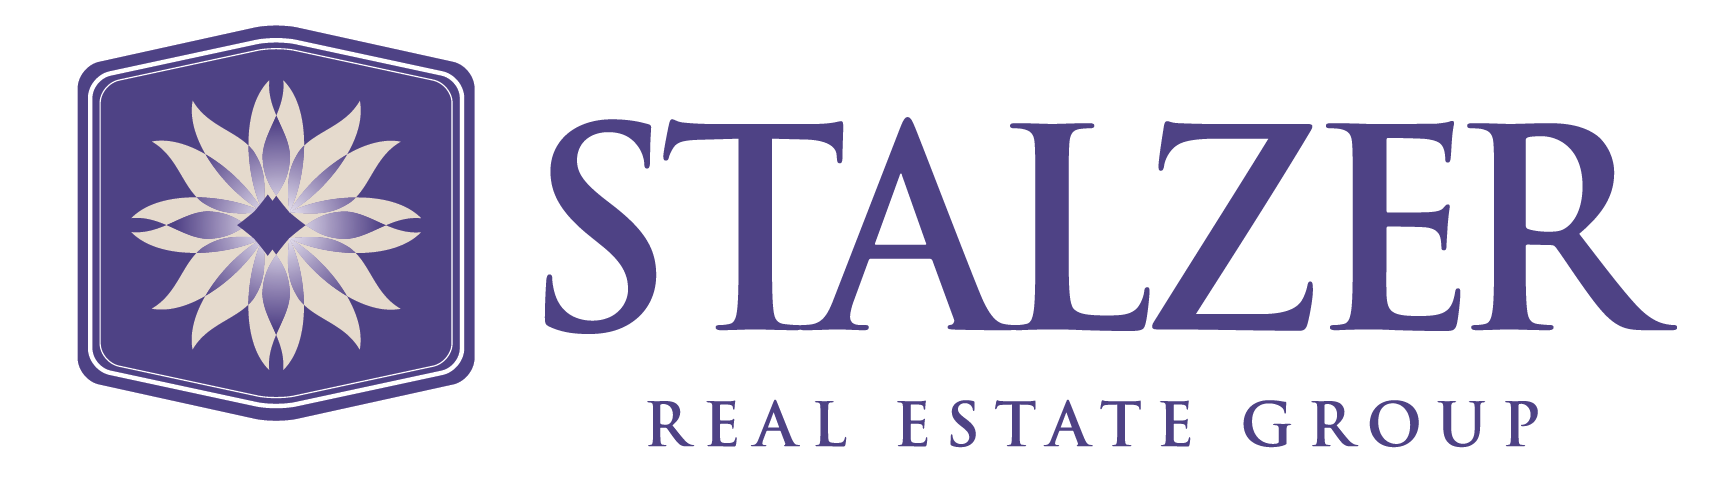 Stalzer Real Estate Group